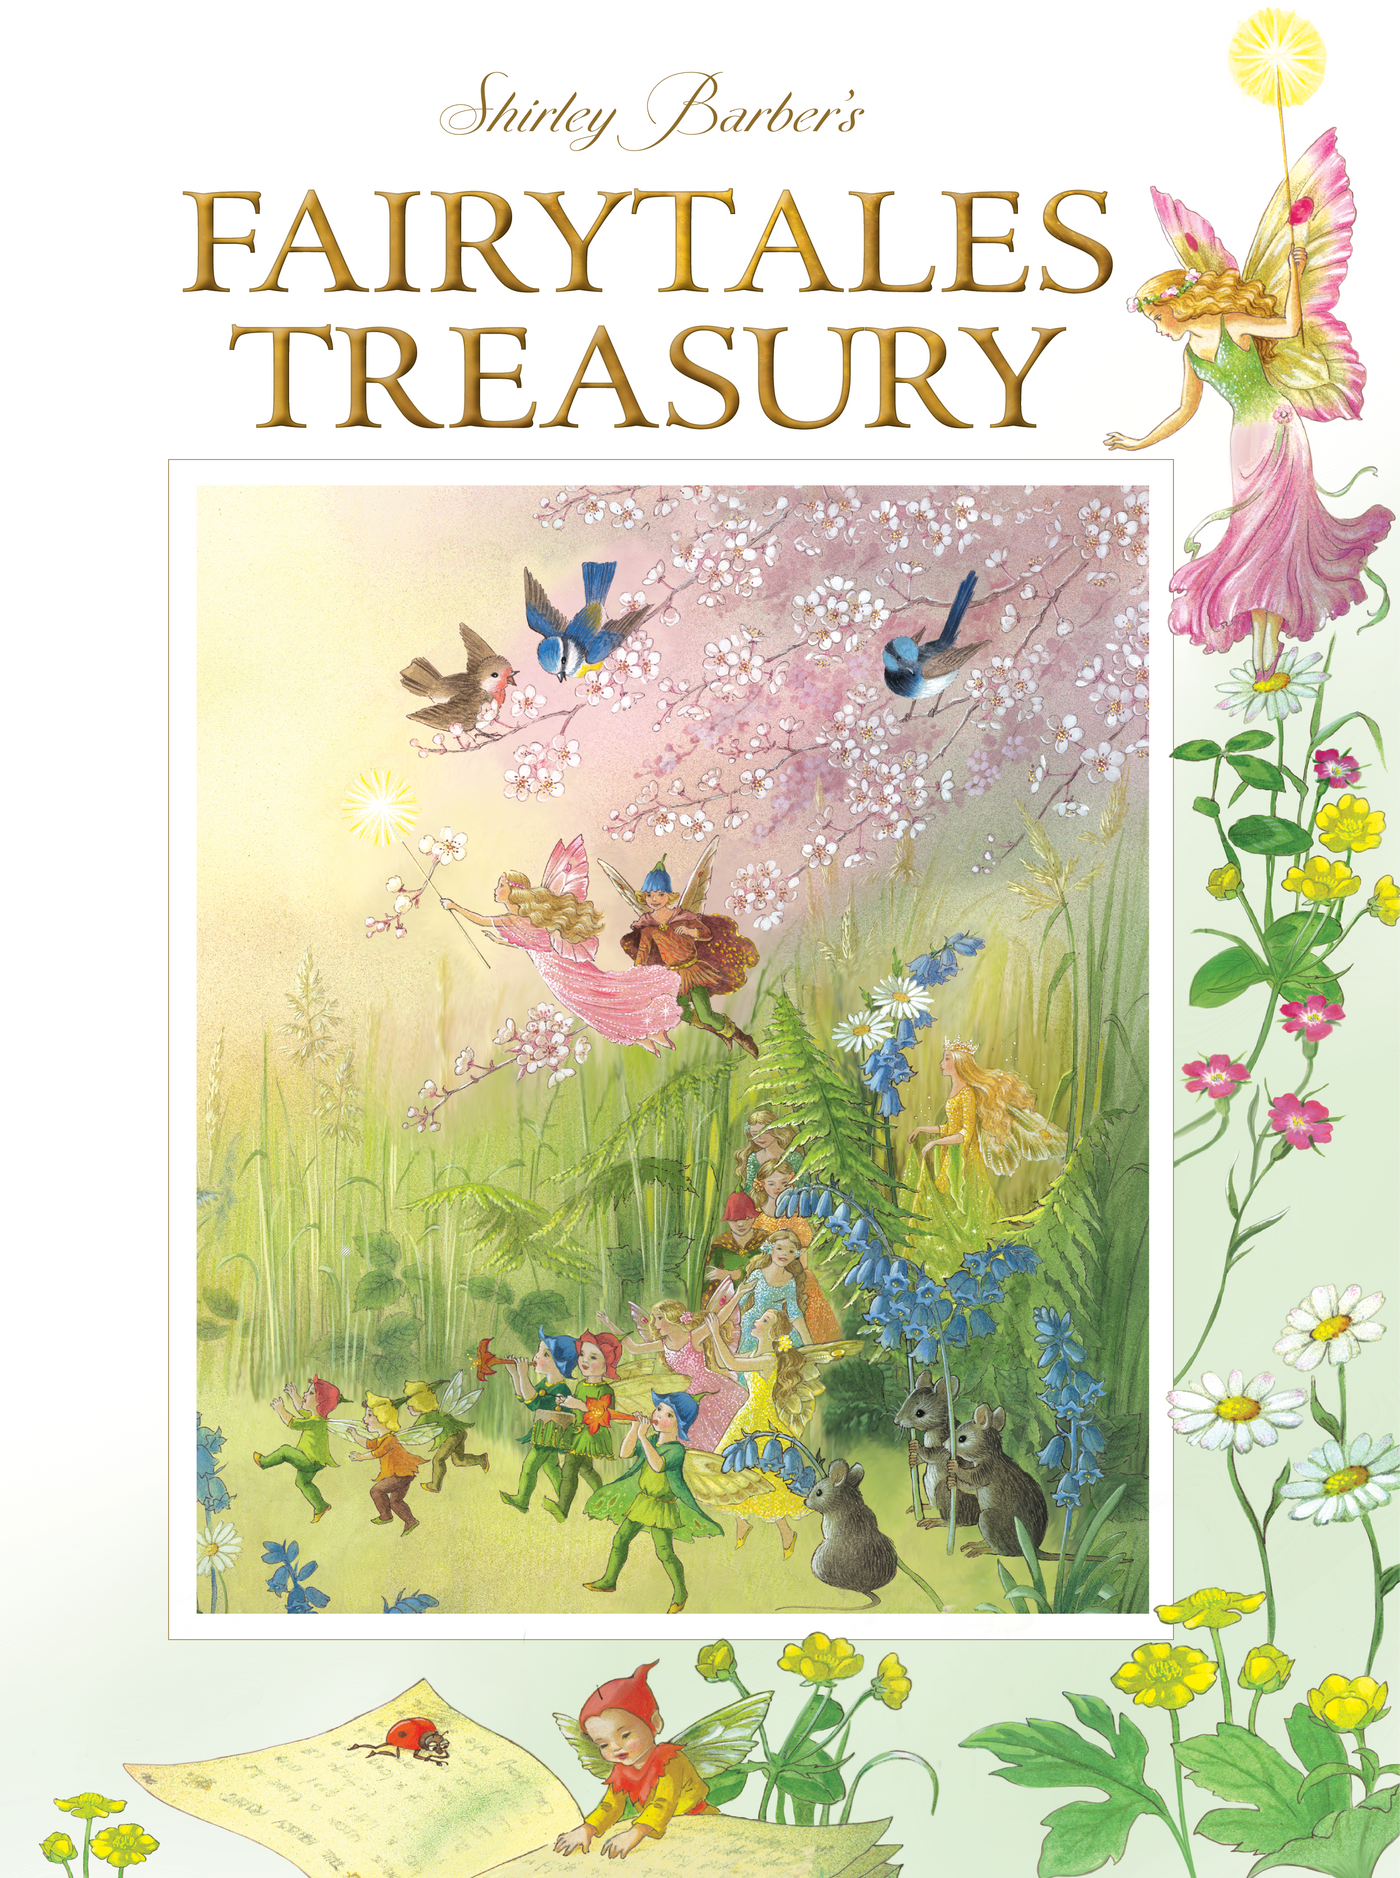 Shirley Barber | Fairytales Treasury